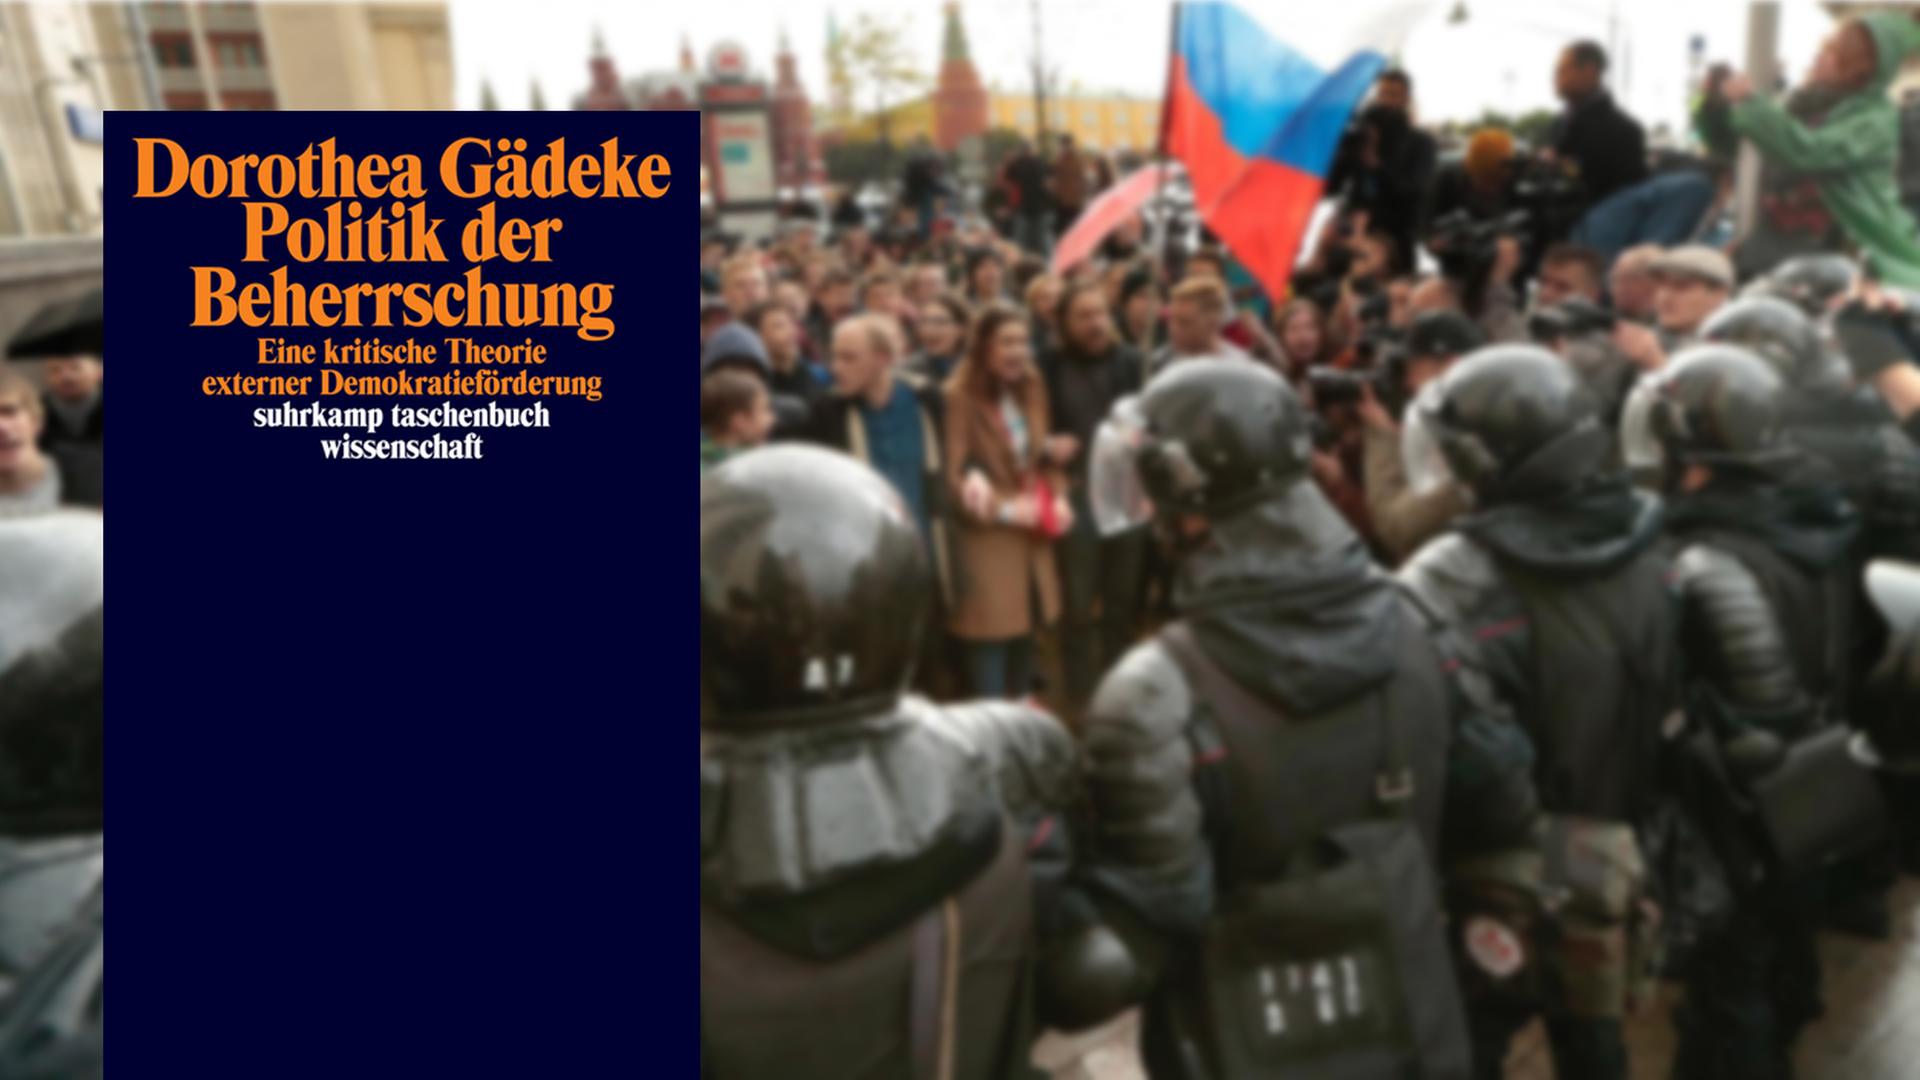 Buchcover Dorothea Gädeke: "Politik der Beherrschung“